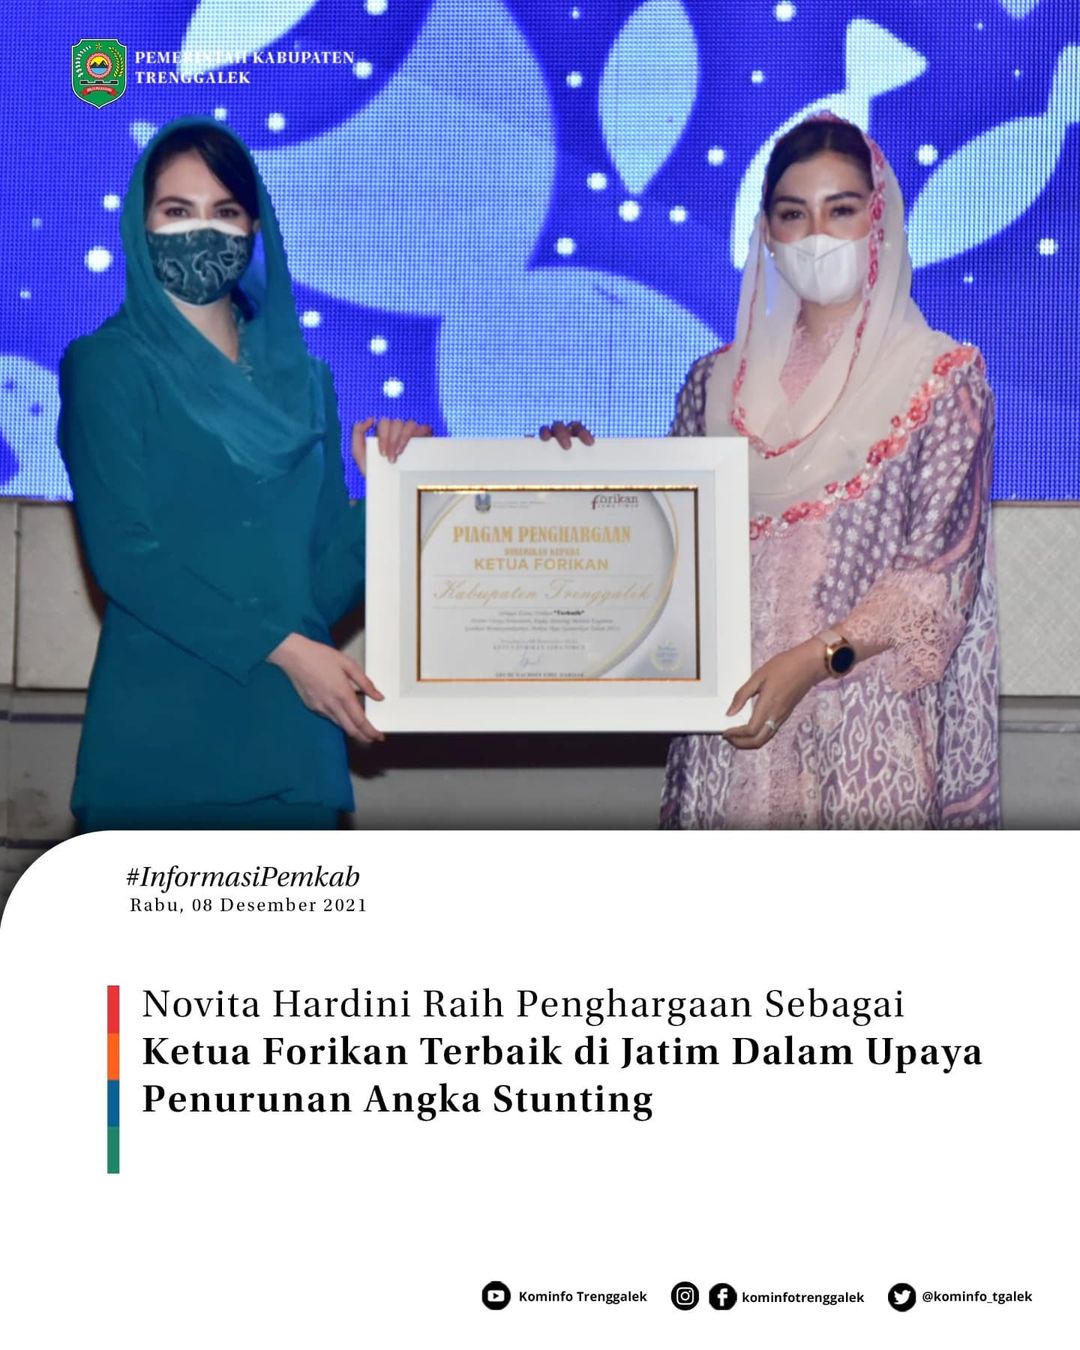 Novita Hardini Raih Penghargaan Sebagai Ketua Forika Terbaik di Jatim Dalam Upaya Penurunan Angka Stunting